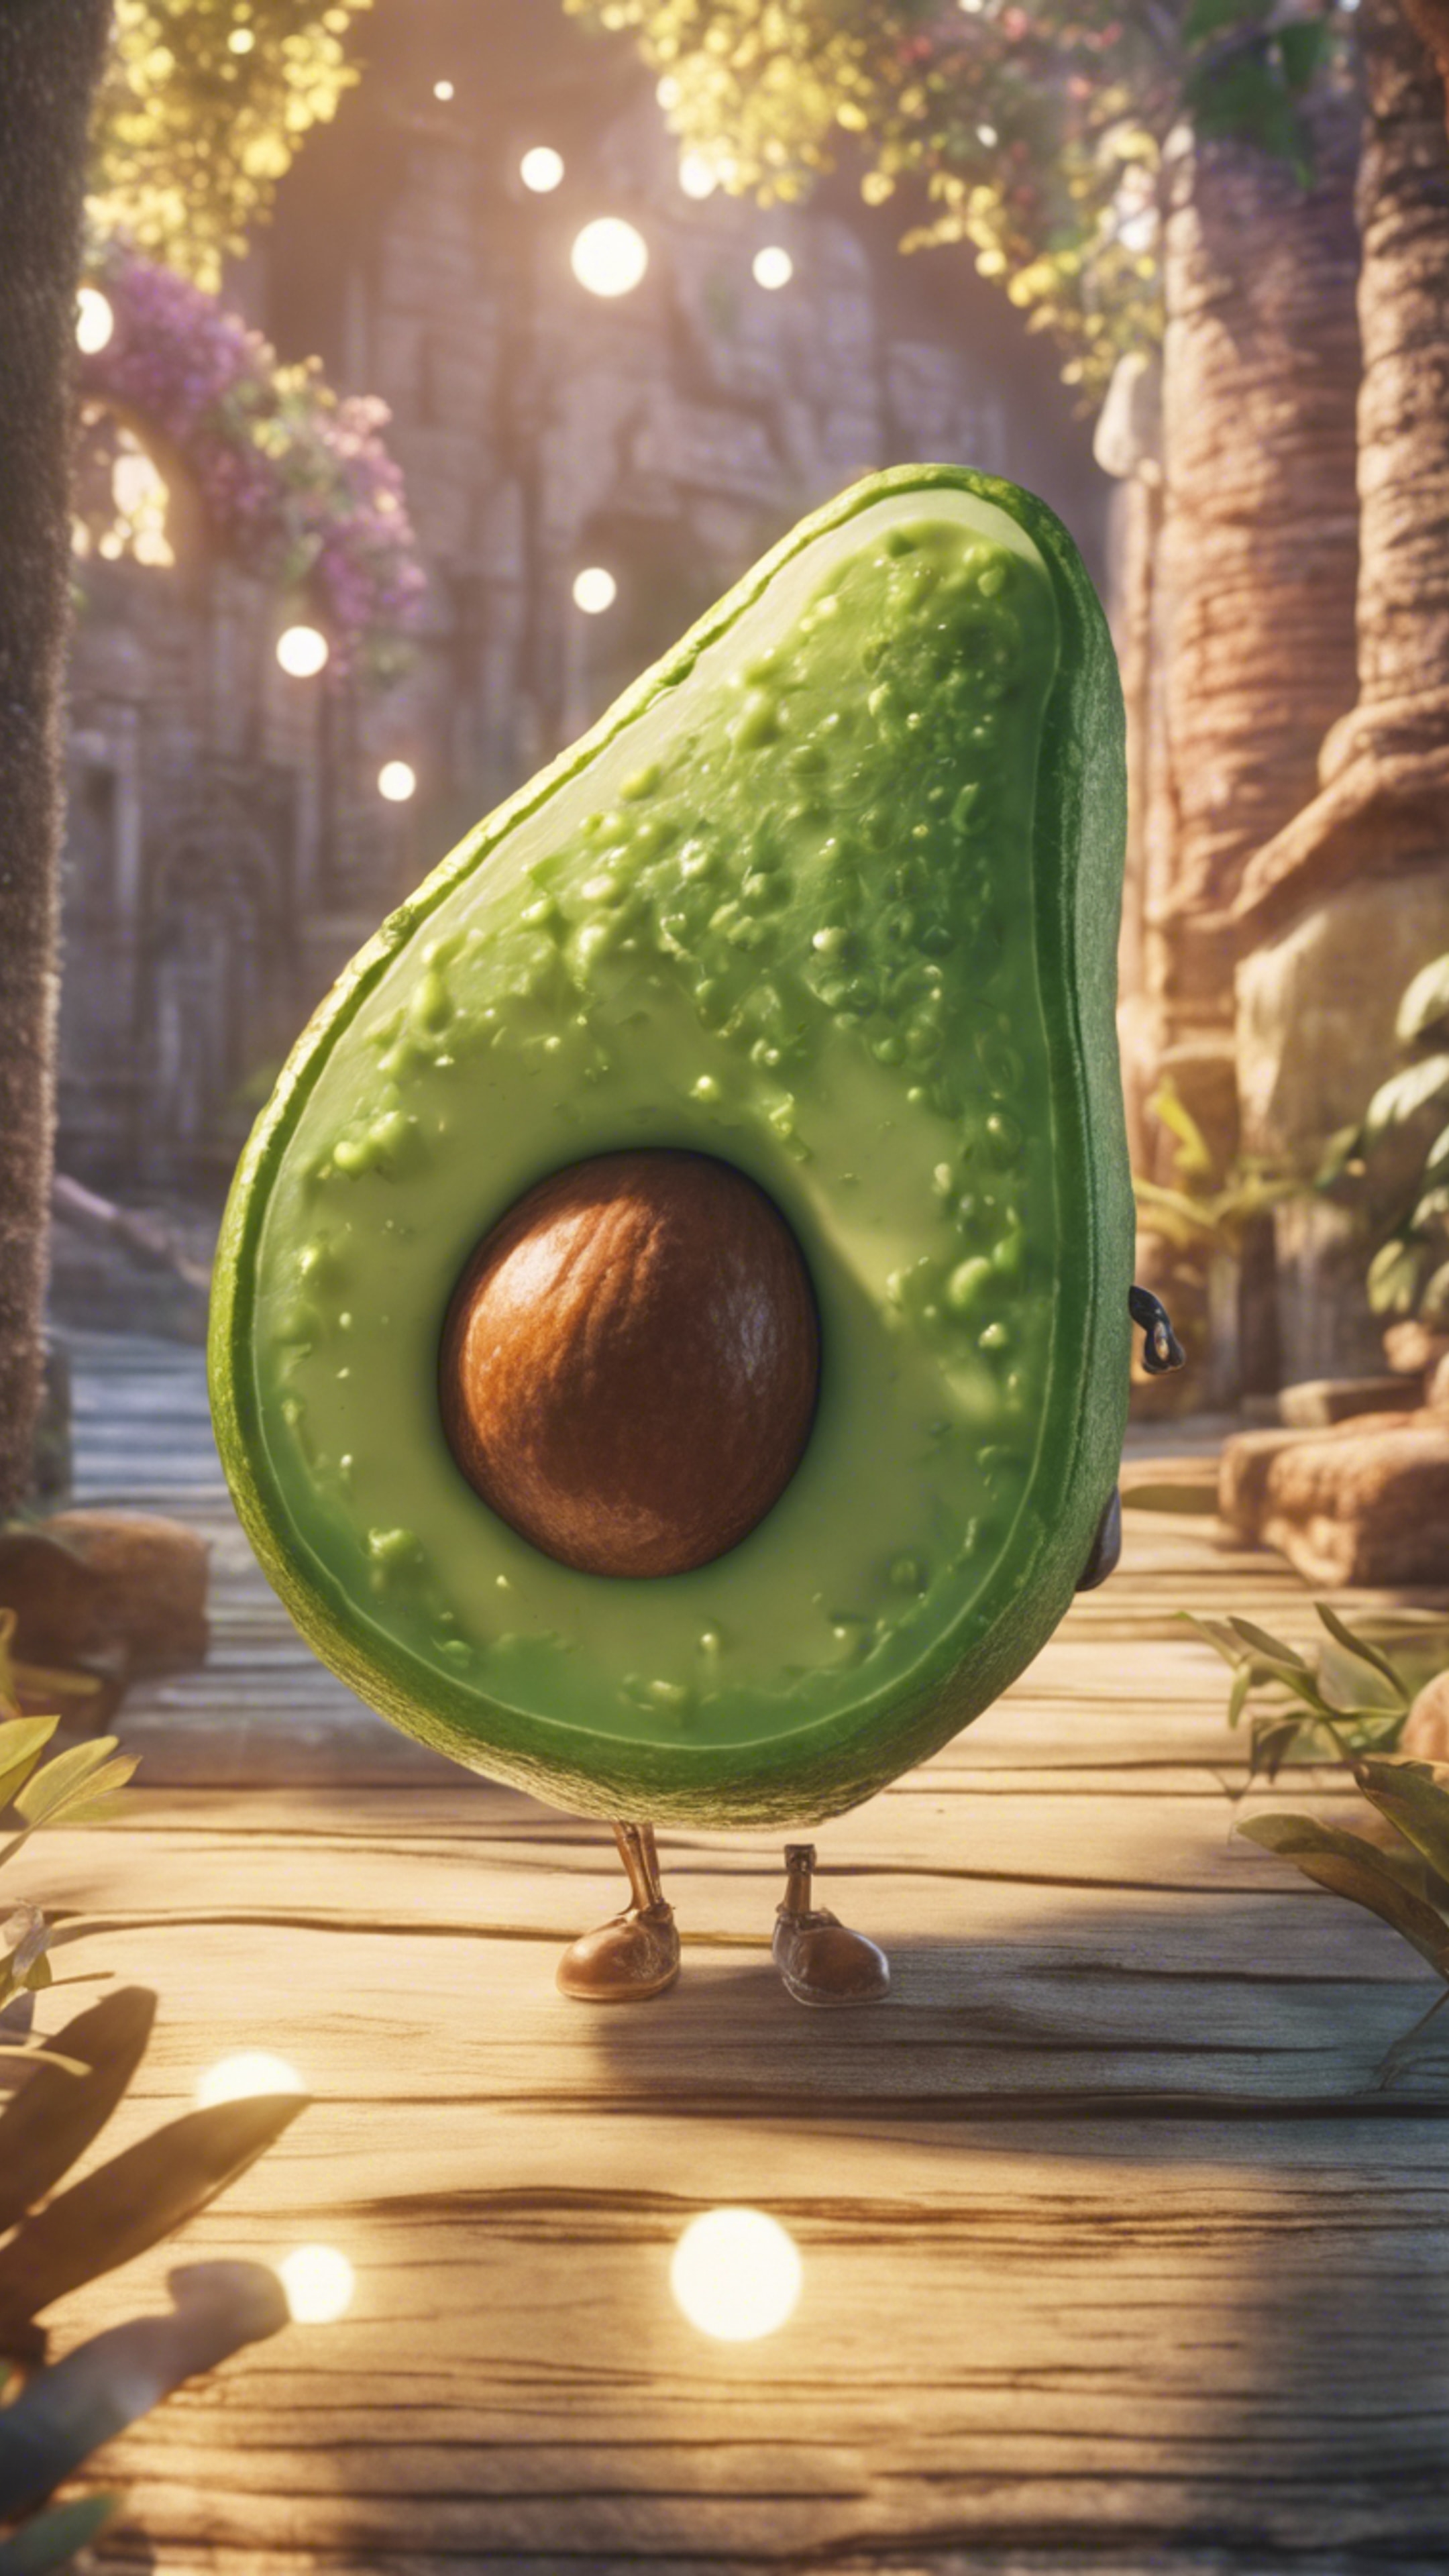 A manga-style scene of an avocado on a magical journey Ფონი[452ab1c8ad254f0b95e7]